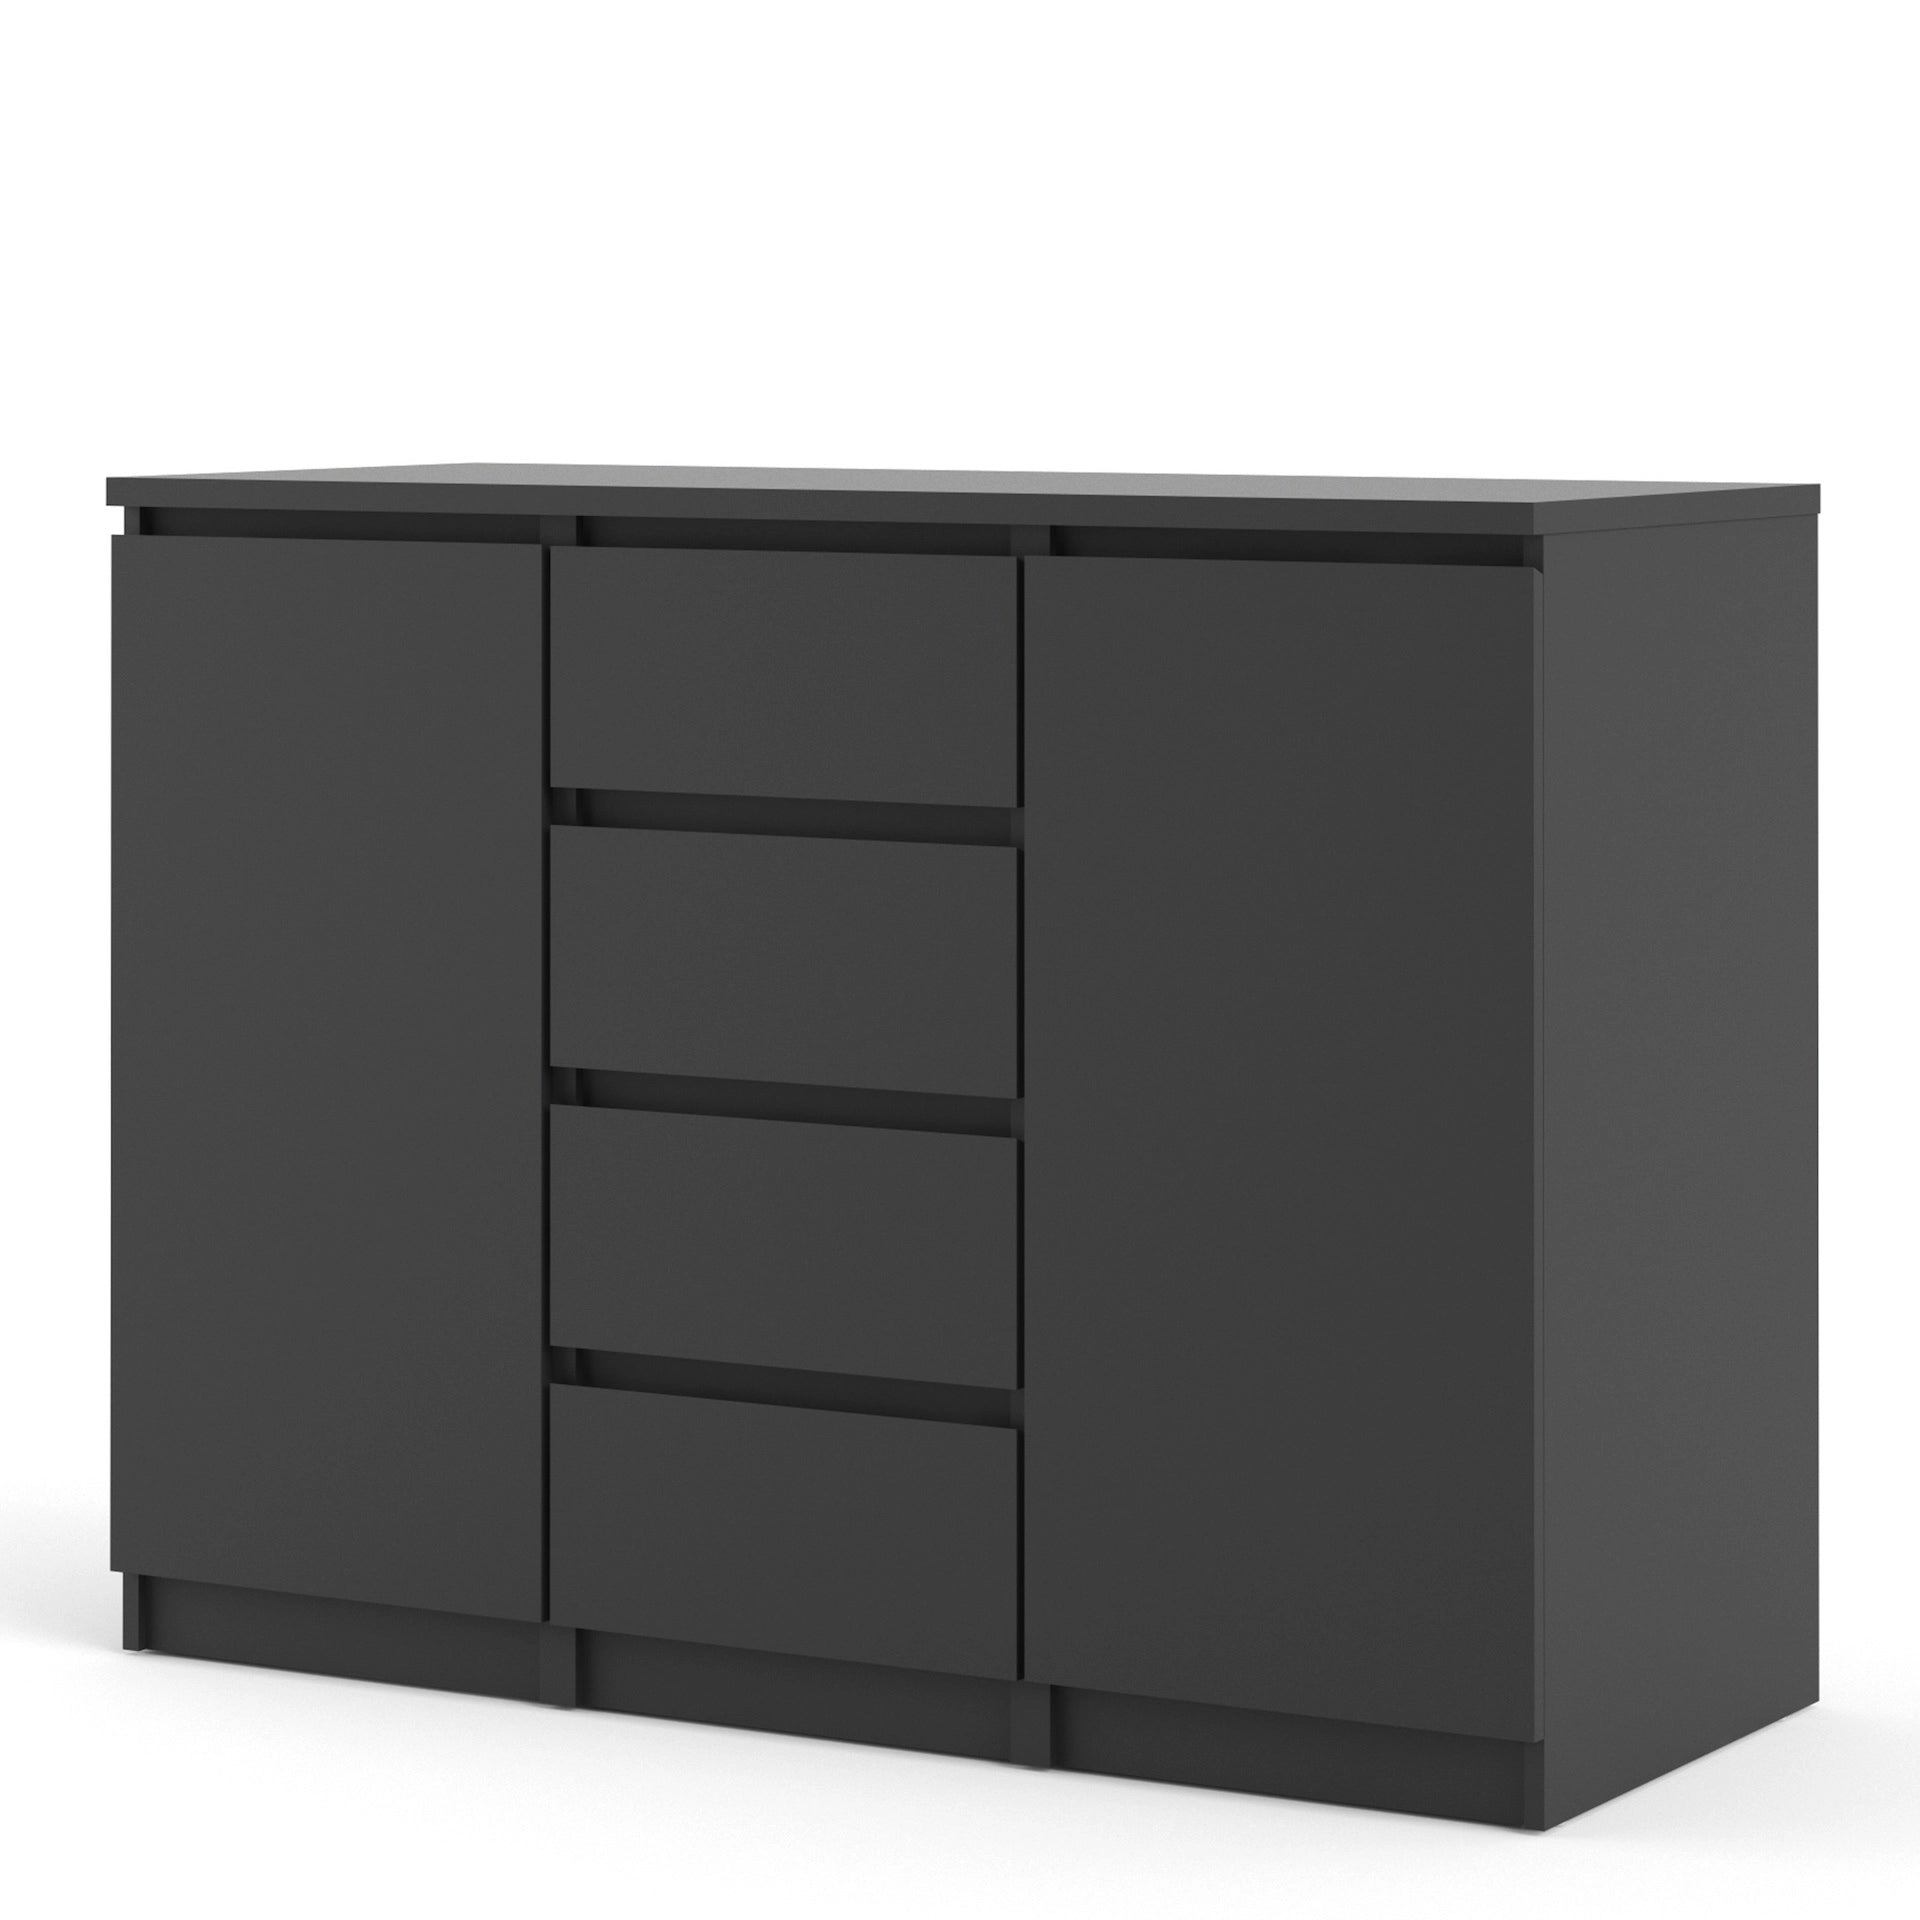 Furniture To Go Naia Sideboard - 4 Drawers 2 Doors in Black Matt